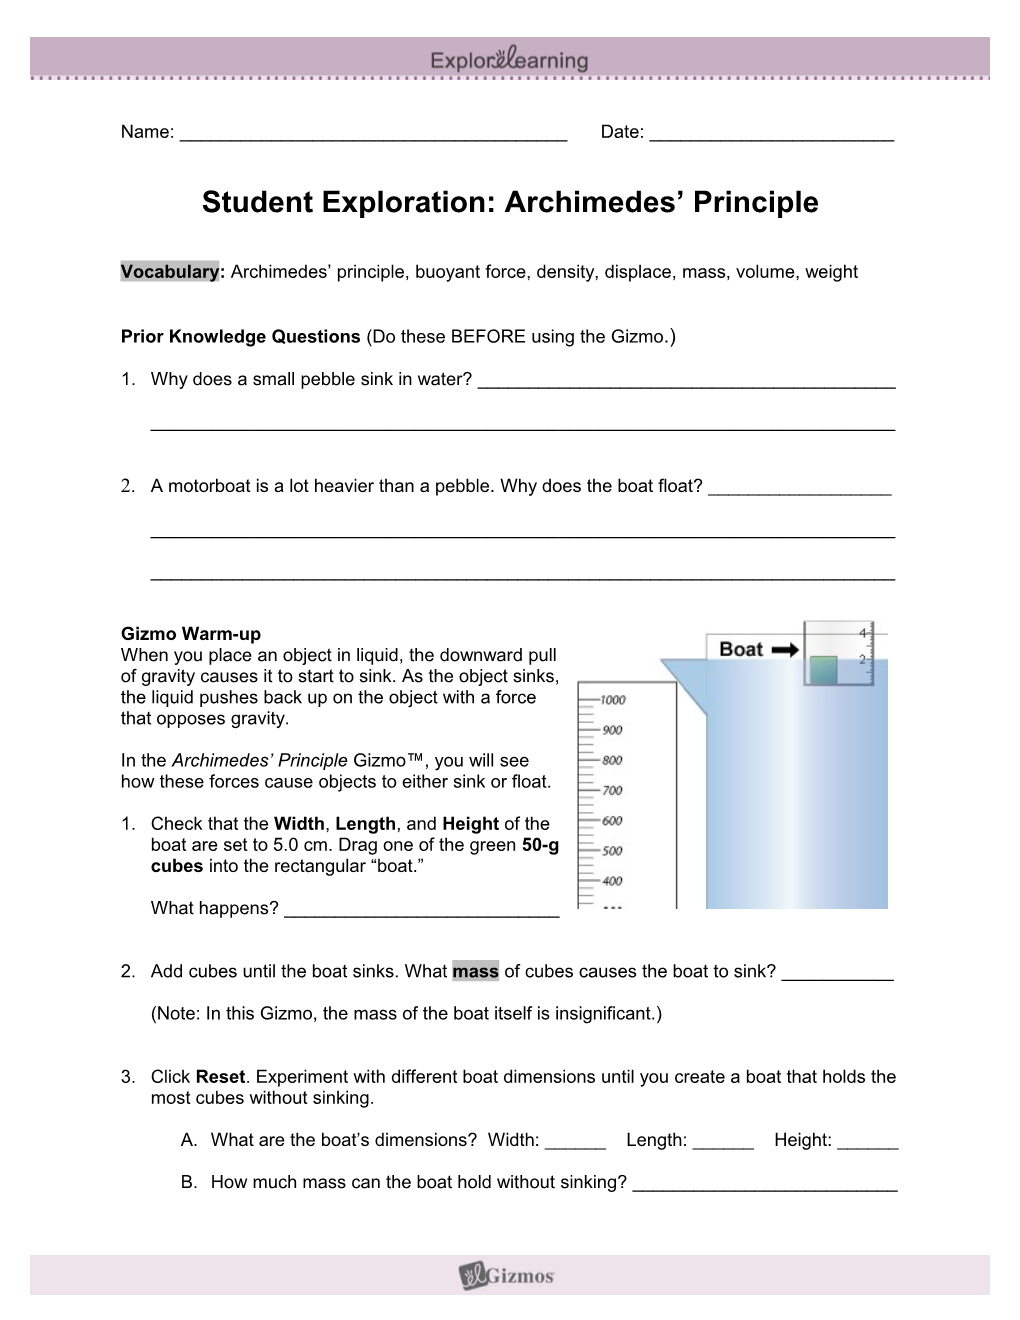 Student Exploration: Archimedes Principle